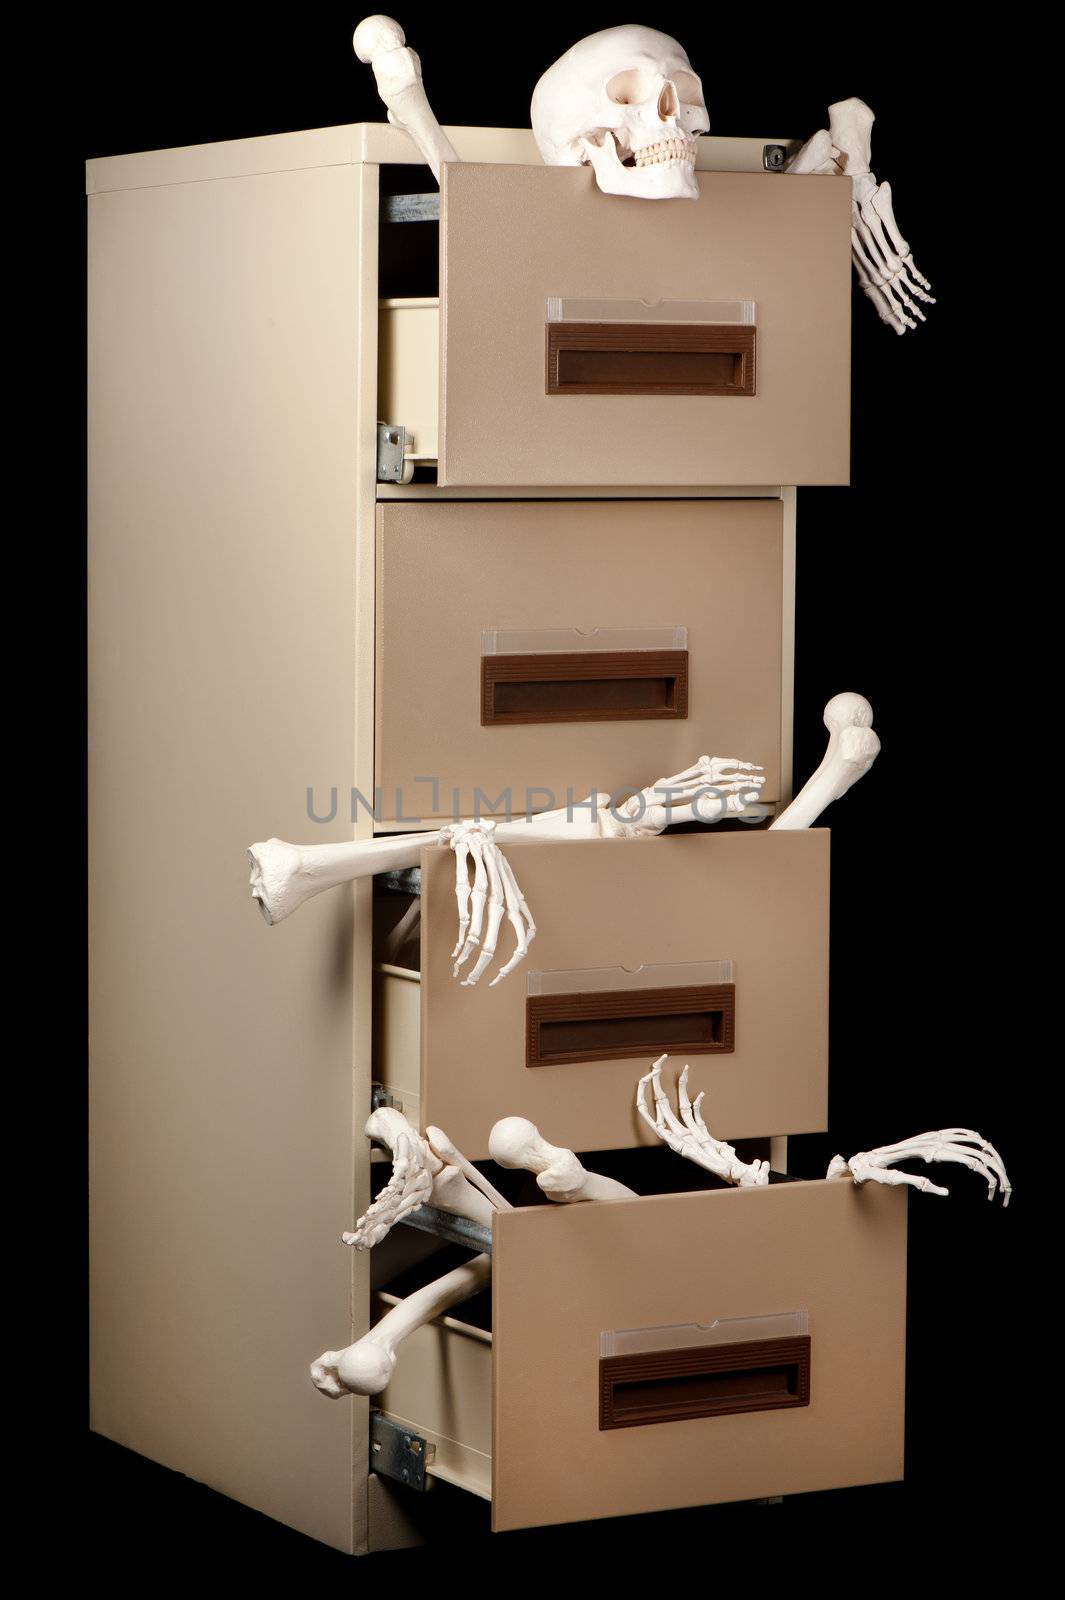 Skeletons in cabinet by Zafi123